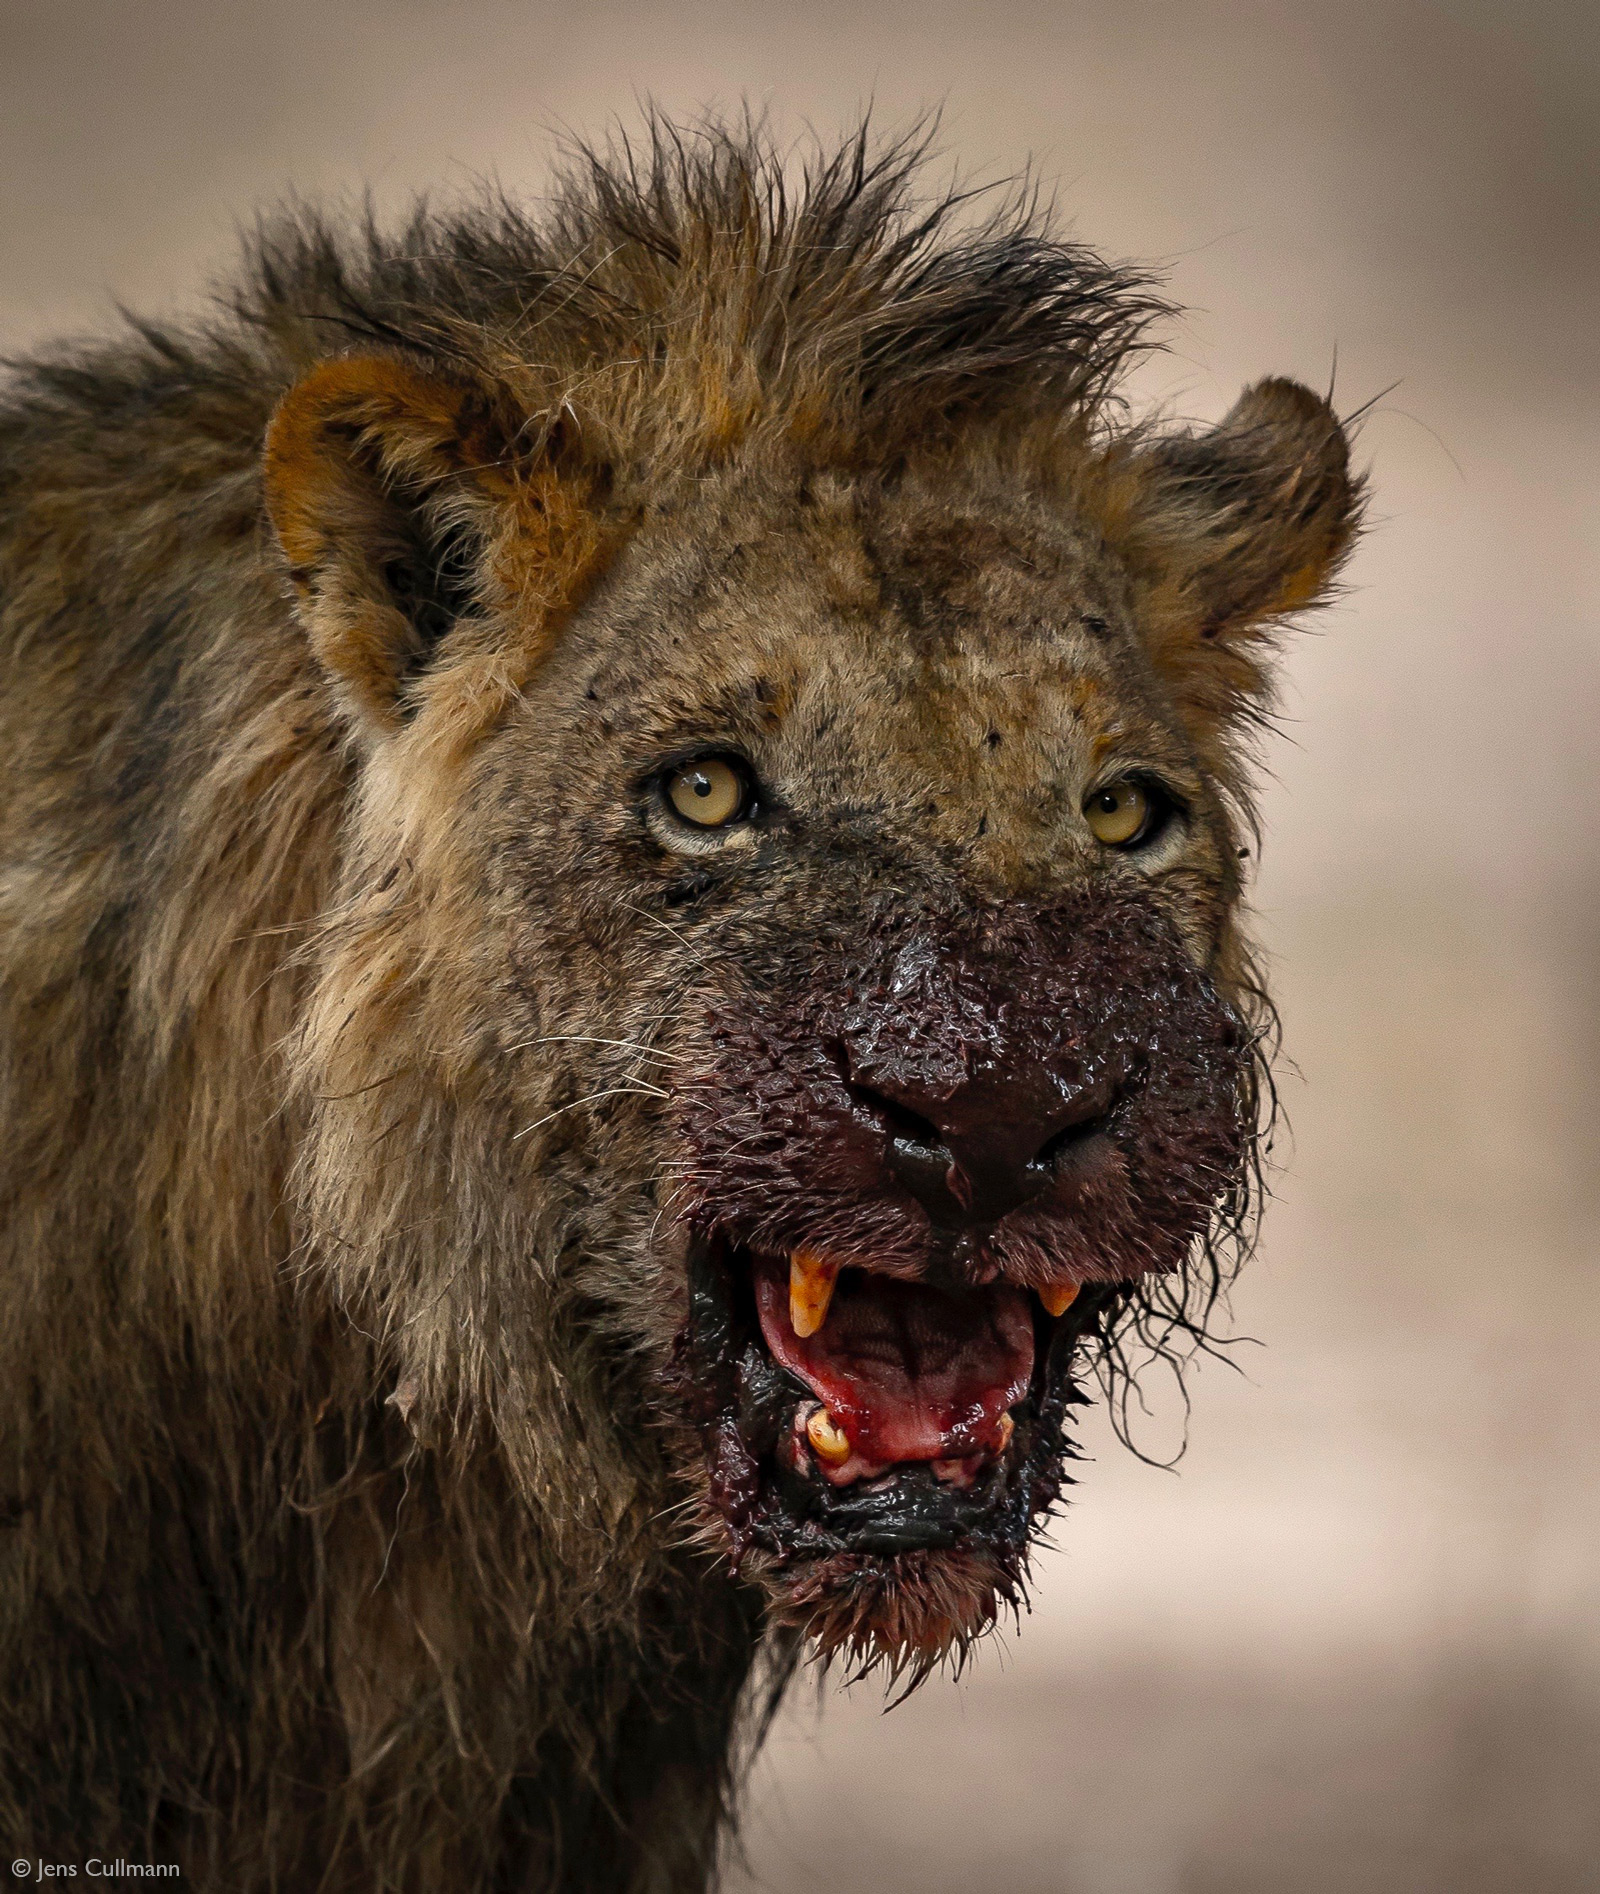 Jens-Cullmann-old-lion-eat-on-an-Eland-carcass-Mana-Pools-National-Park-Zimbabwe.jpg